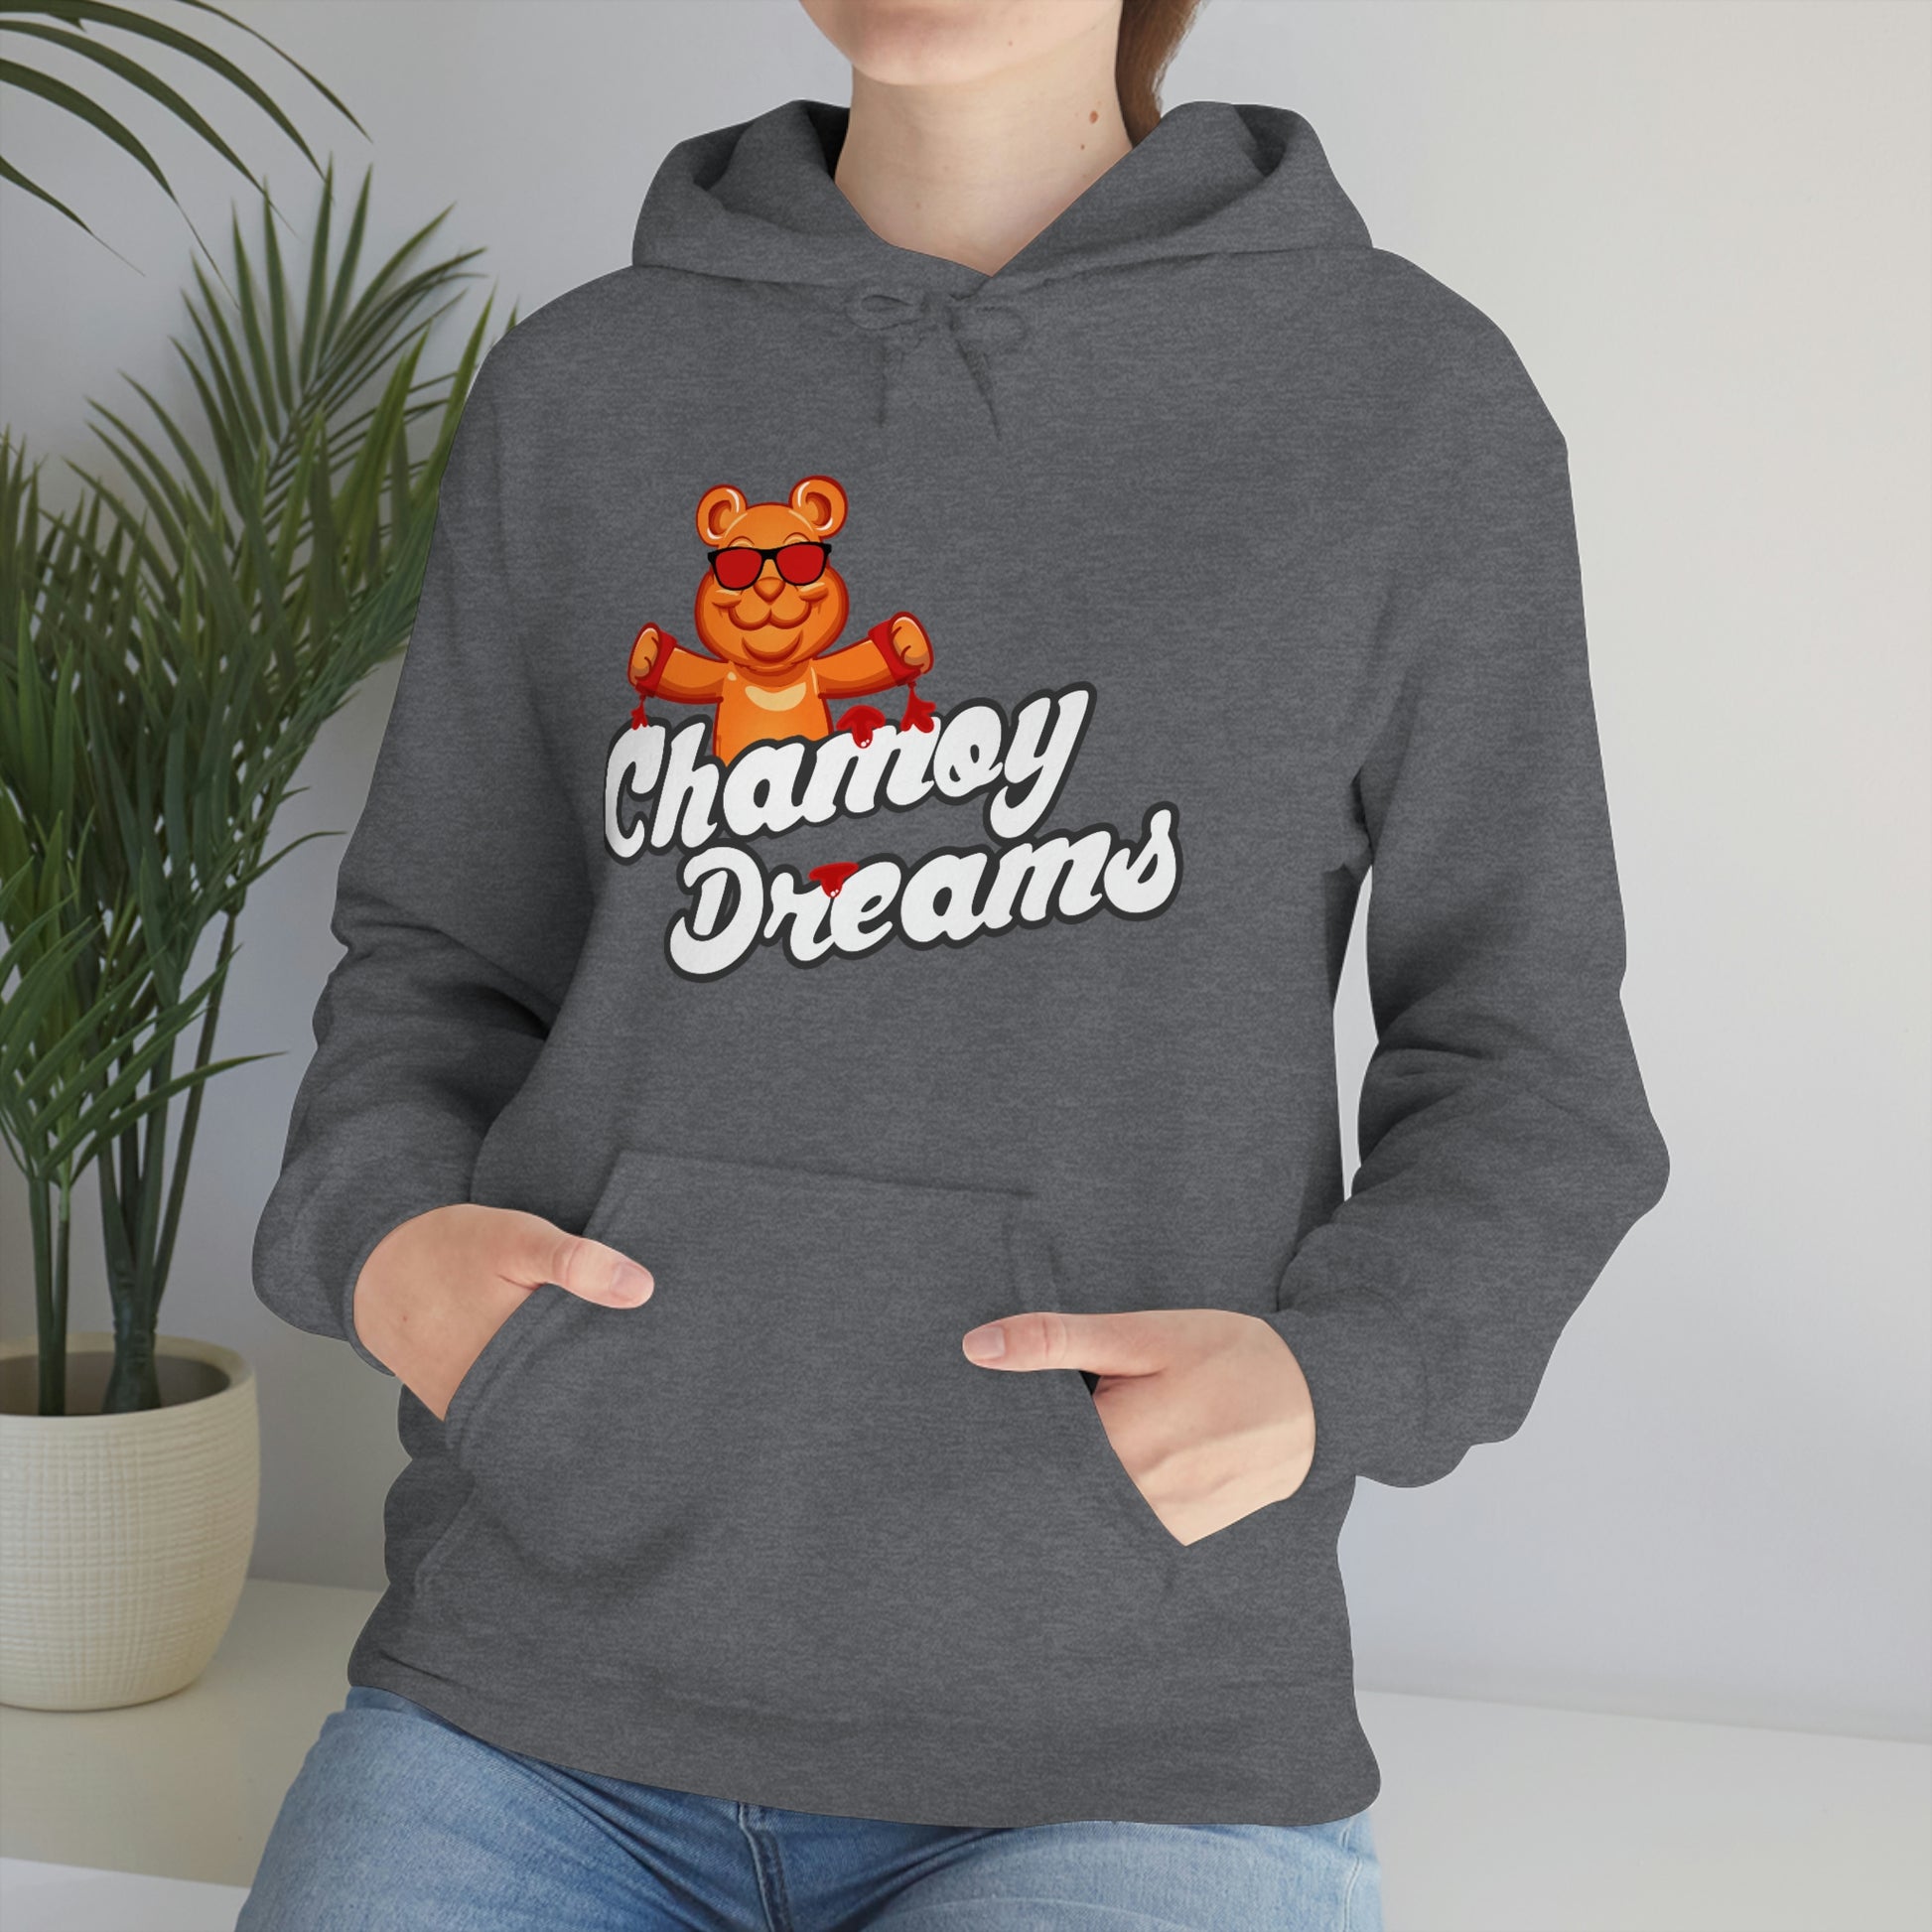 Unisex Heavy Blend™ Hooded Sweatshirt - New Chamoy Dreams